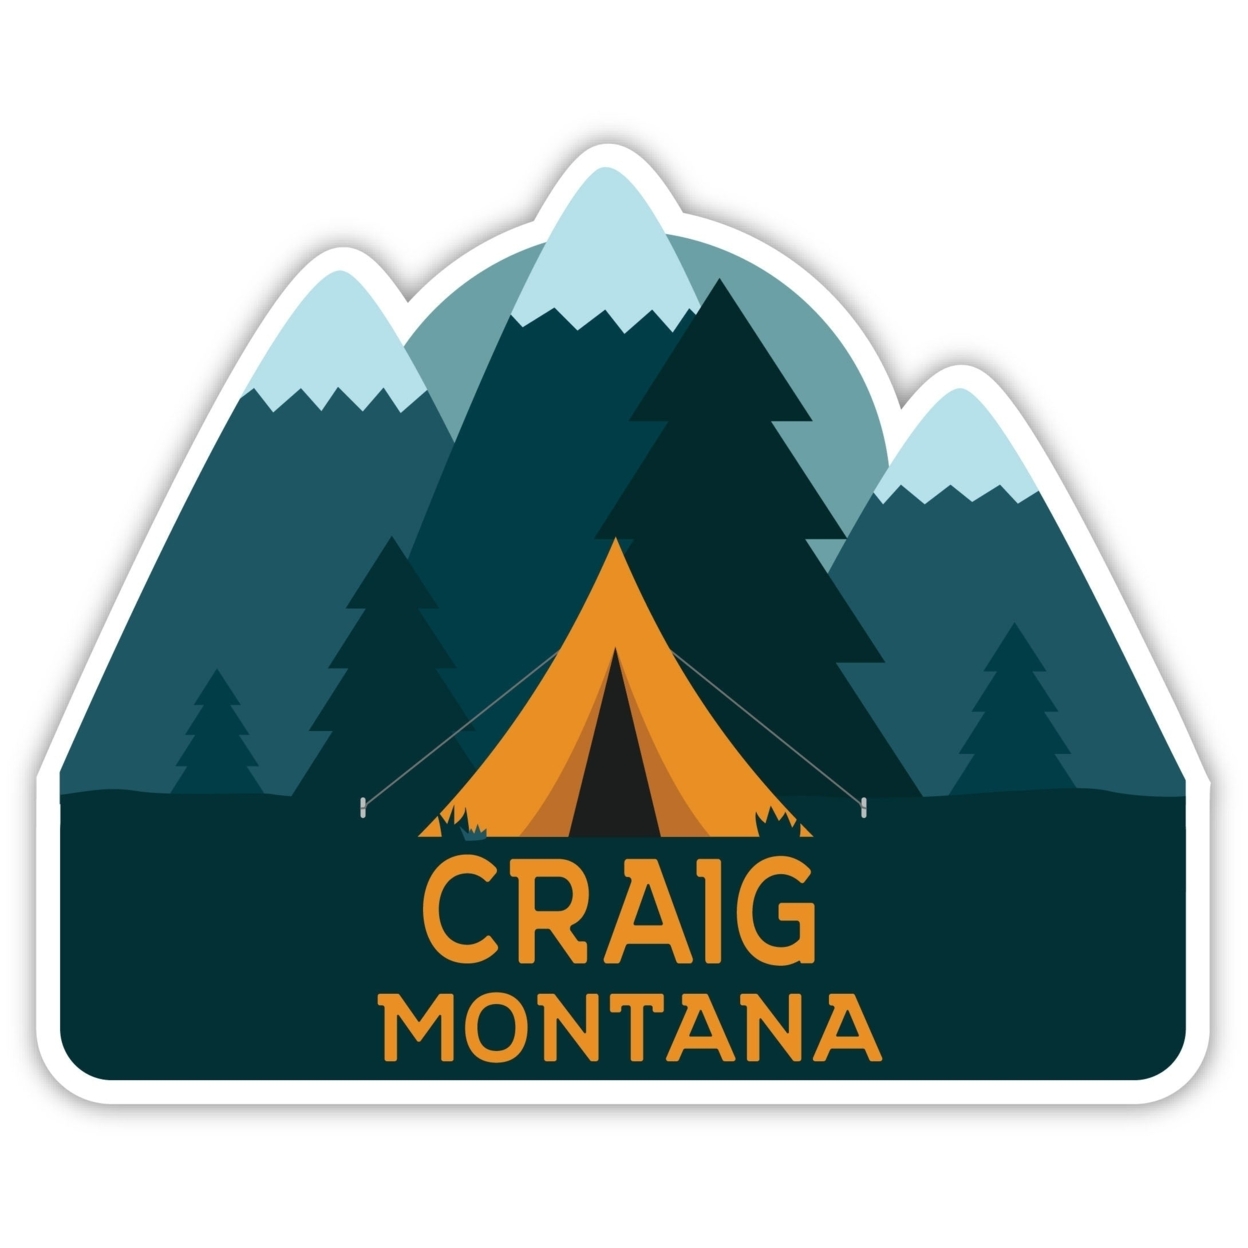 Craig Montana Souvenir Decorative Stickers (Choose Theme And Size) - 4-Pack, 4-Inch, Tent